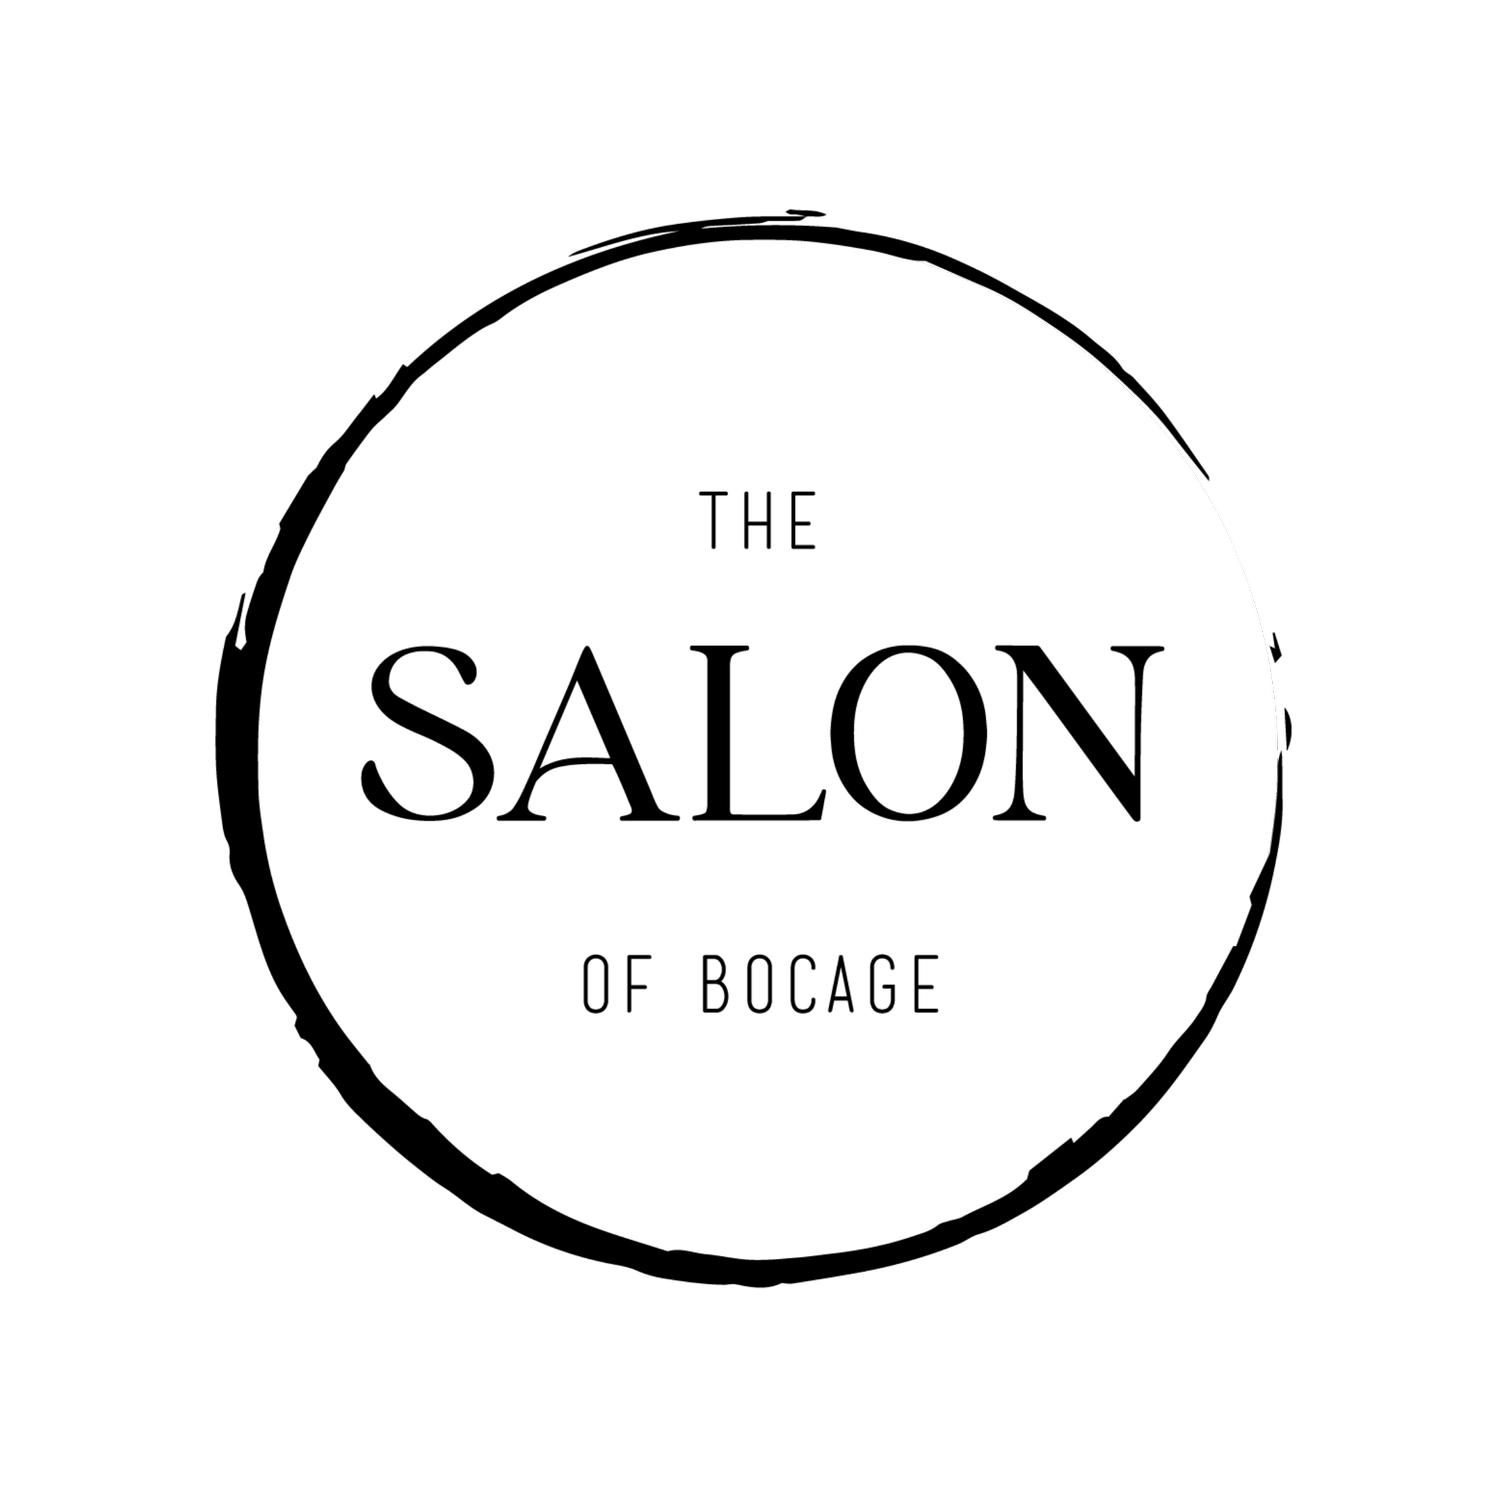 The Salon of Bocage